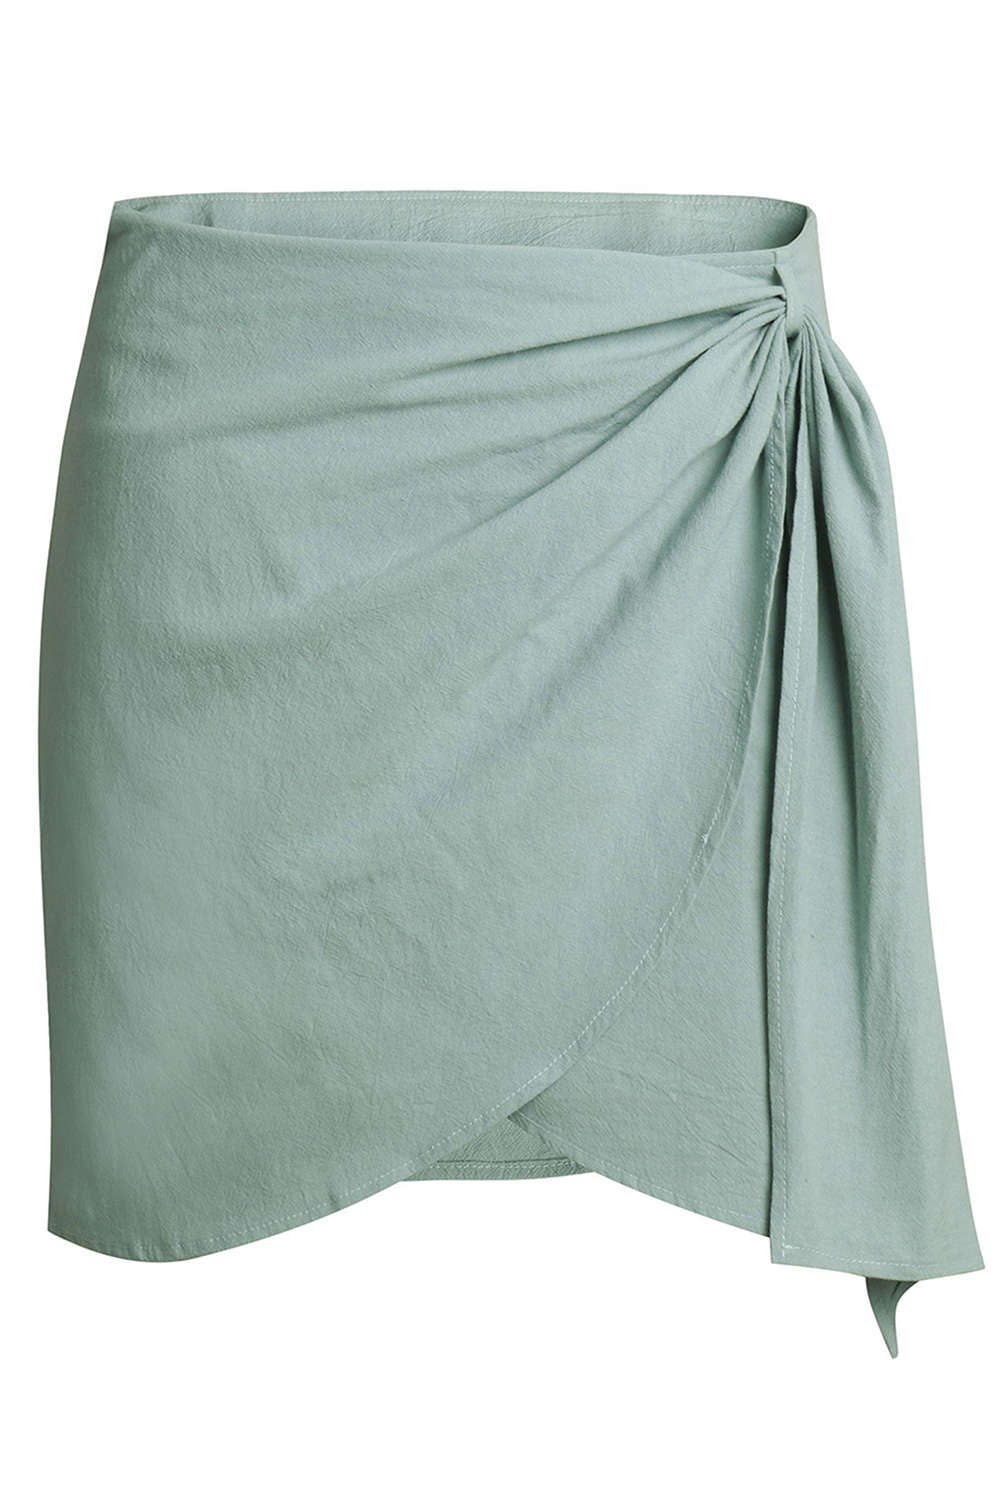 Iyasson Women's Mini Wrap Skirt